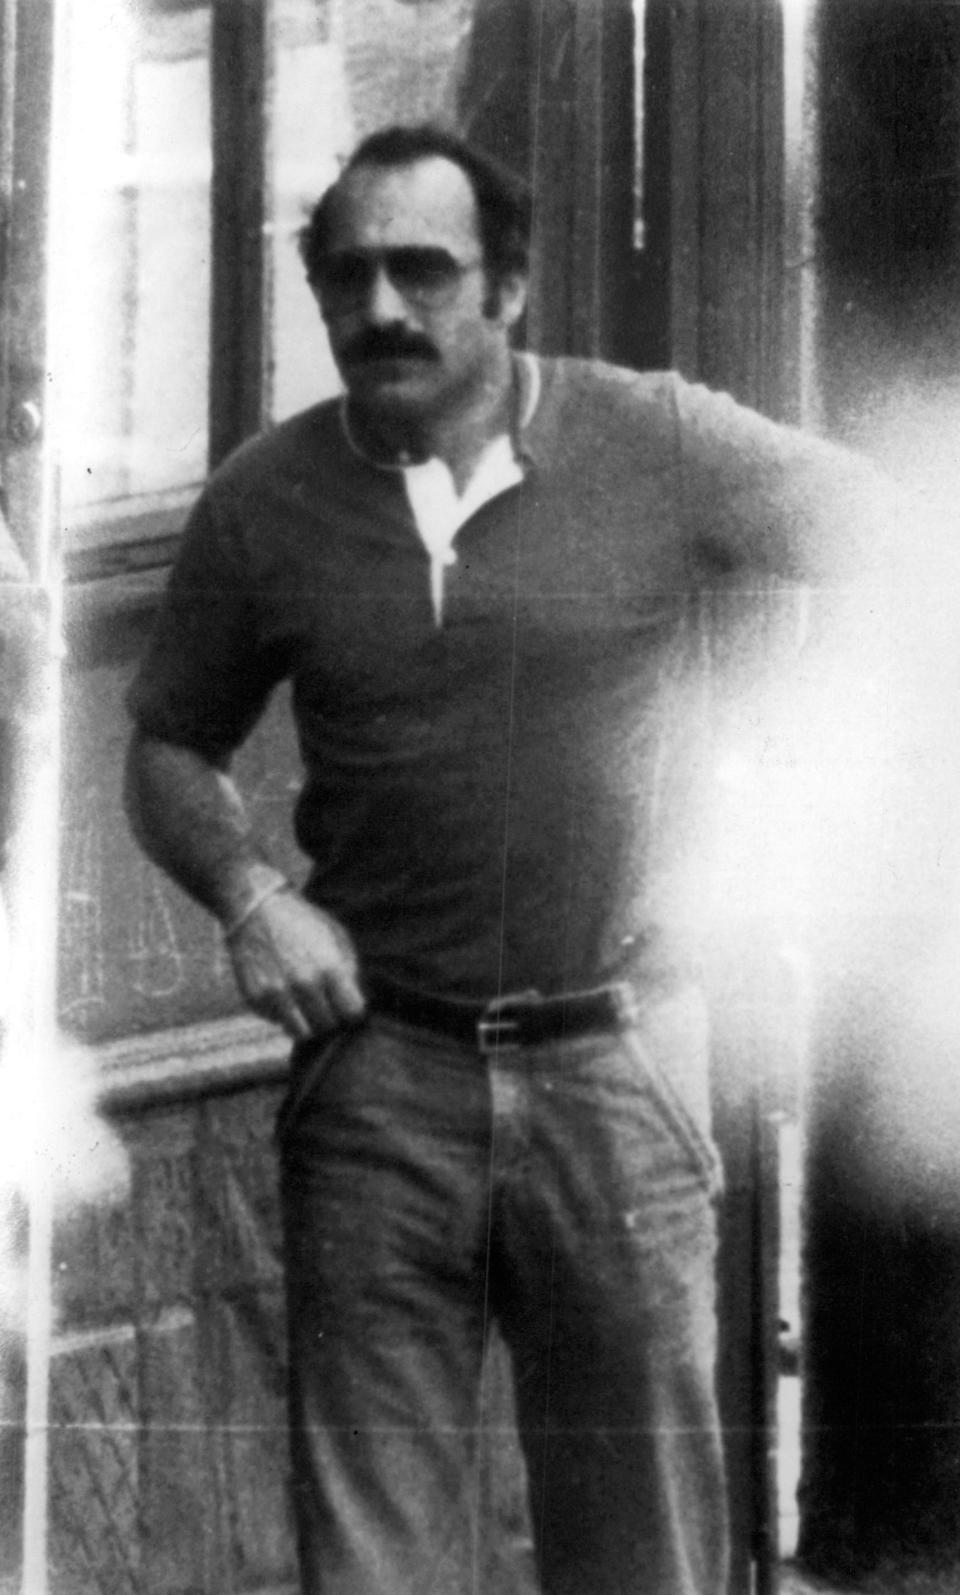 An undated FBI surveillance photo shows Joe Pistone undercover as Donnie Brasco.